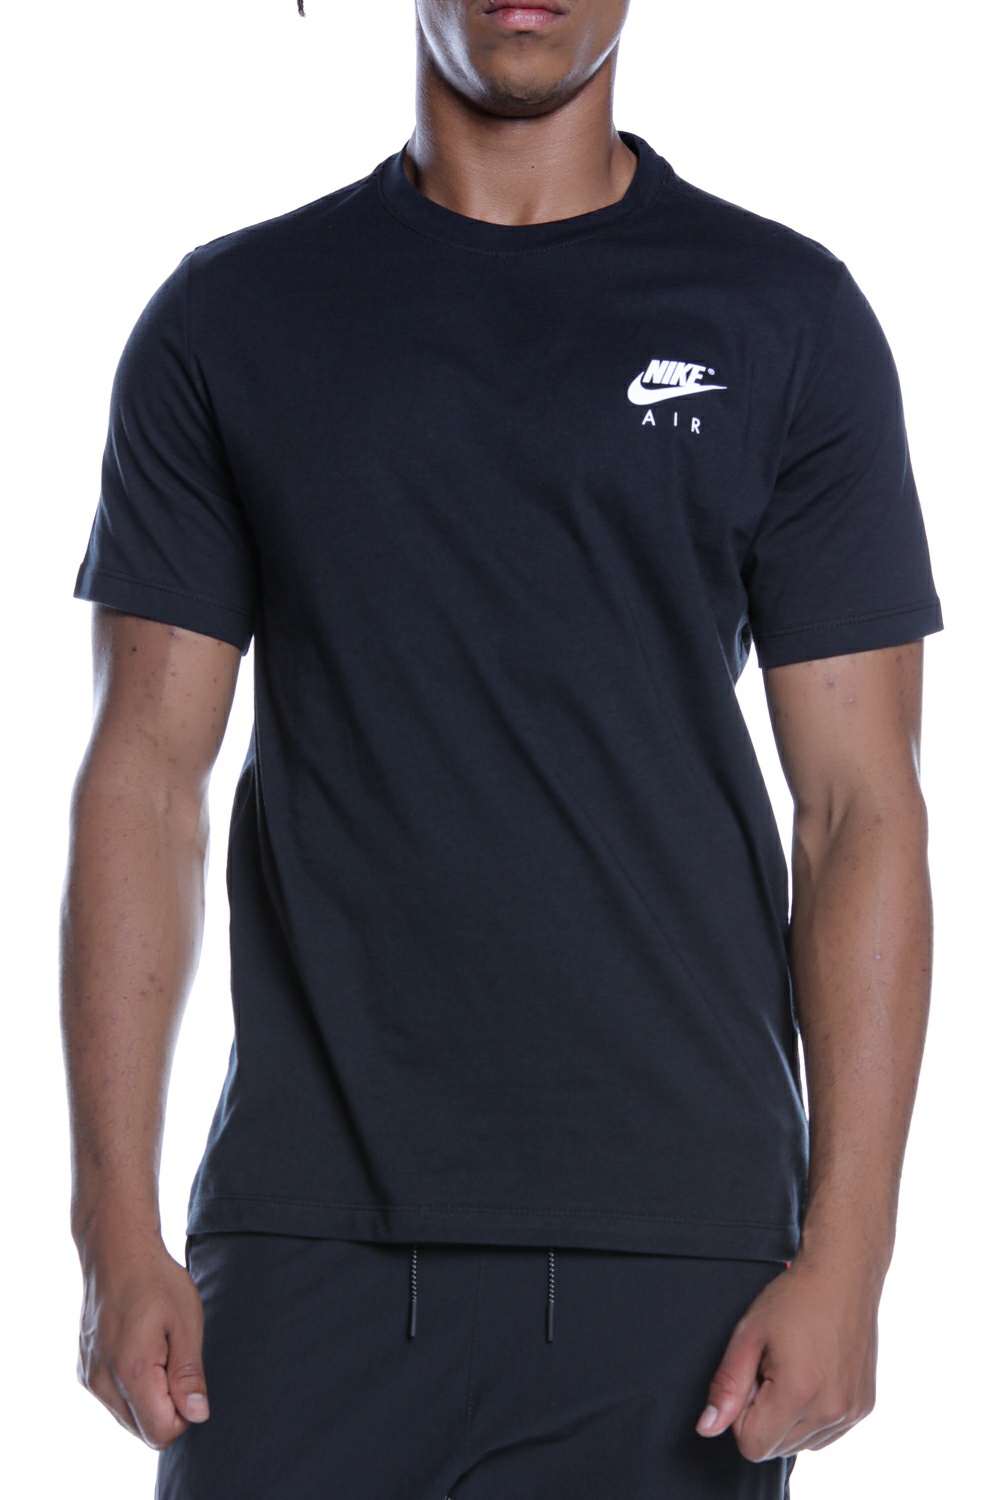 NIKE – Ανδρικο t-shirt NIKE M NSW TEE NIKE AIR GX μαυρο